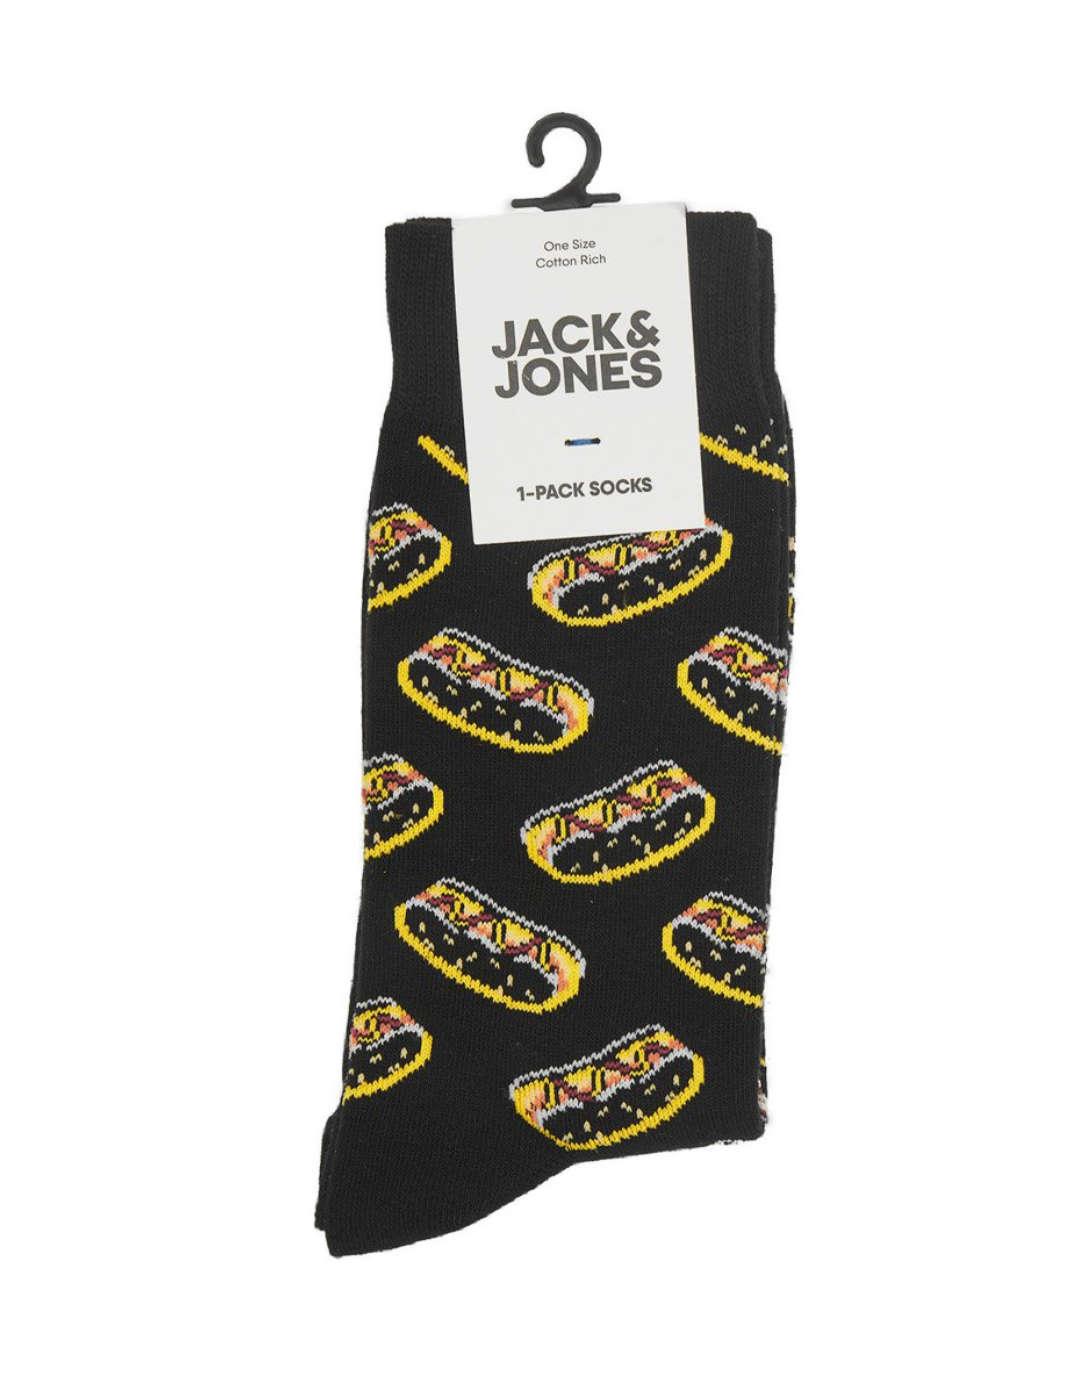 Calcetines Jack&Jones Fastfood negro altos con dibujo hotdog